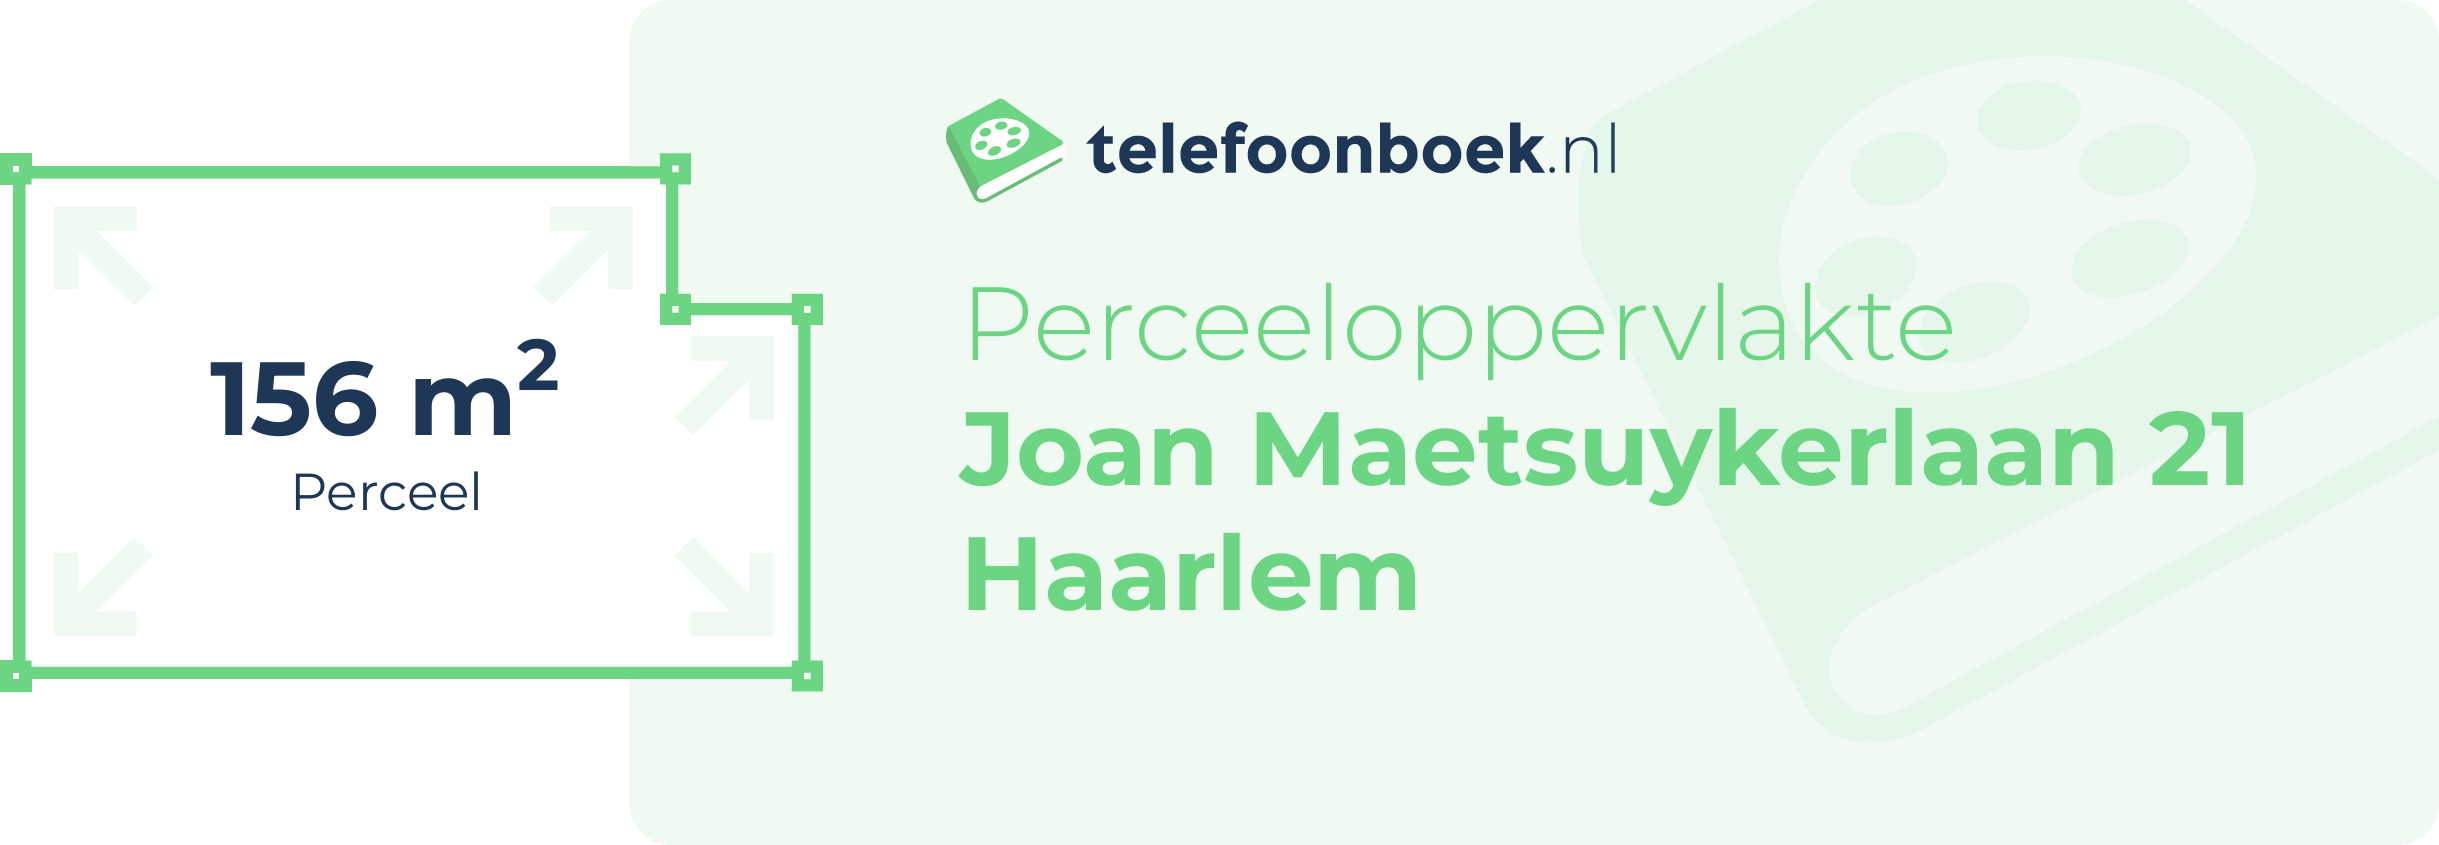 Perceeloppervlakte Joan Maetsuykerlaan 21 Haarlem